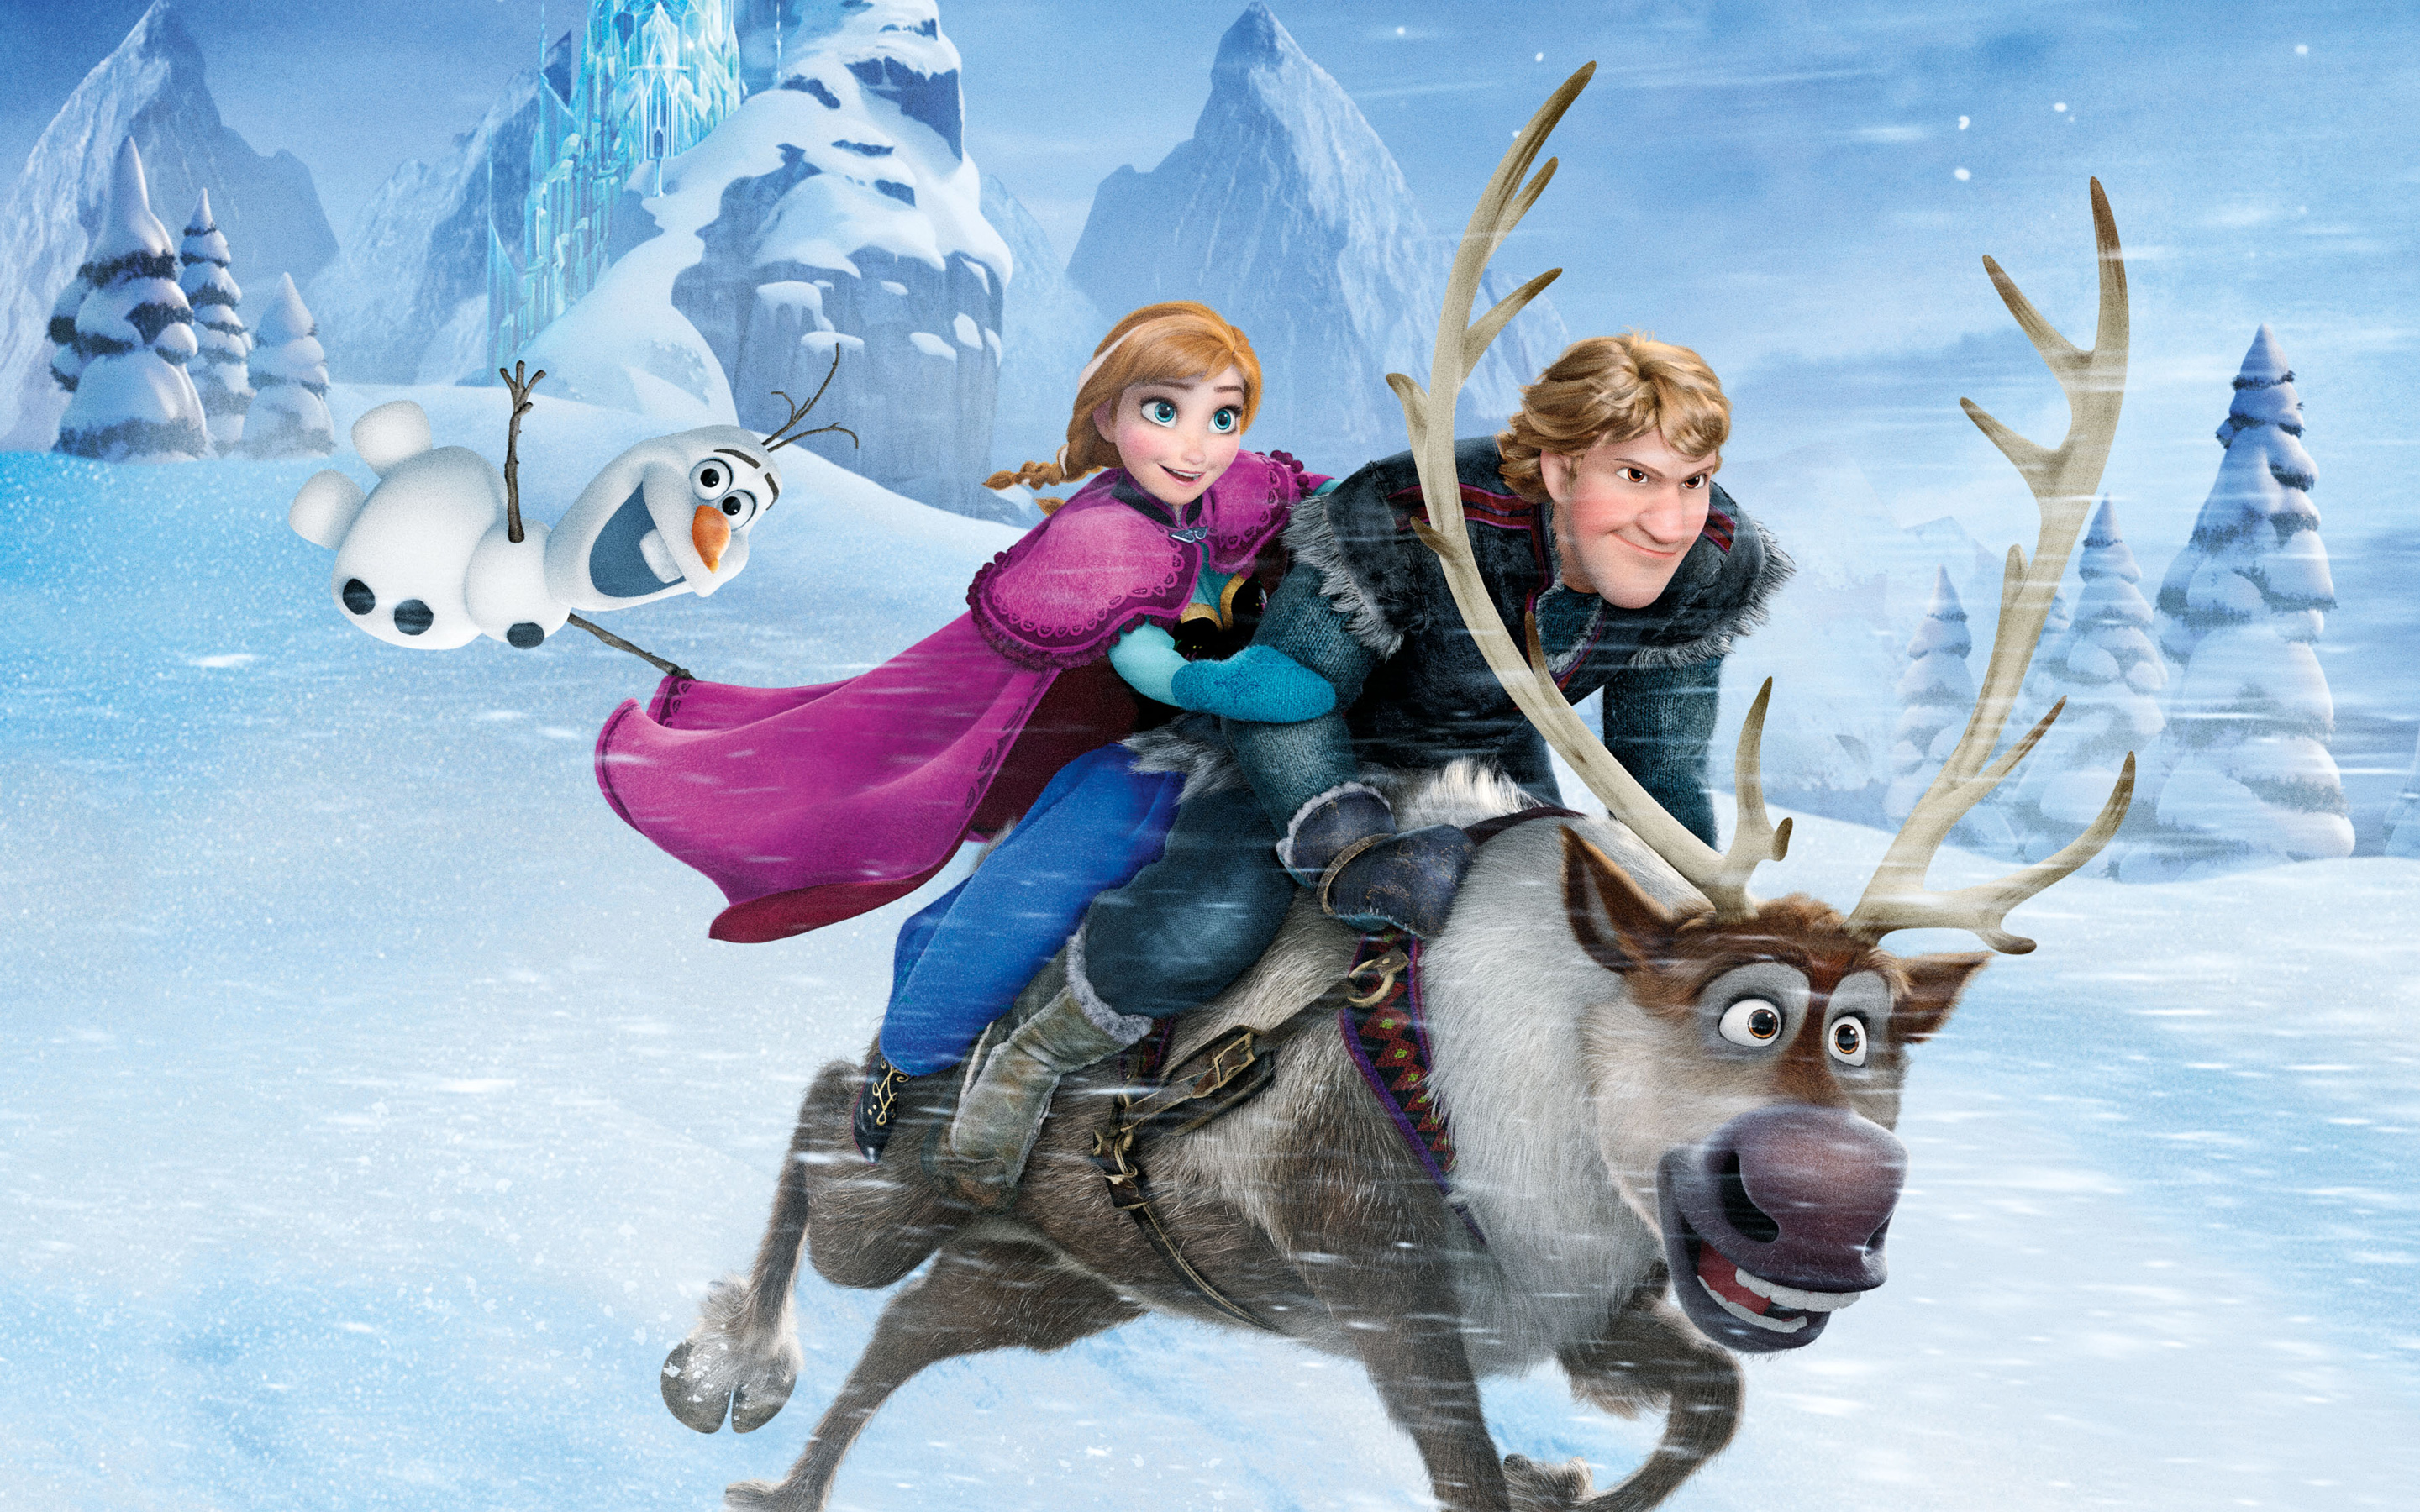 Frozen: Uma Aventura Congelante lidera bilheteria no Brasil pela terceira semana consecutiva